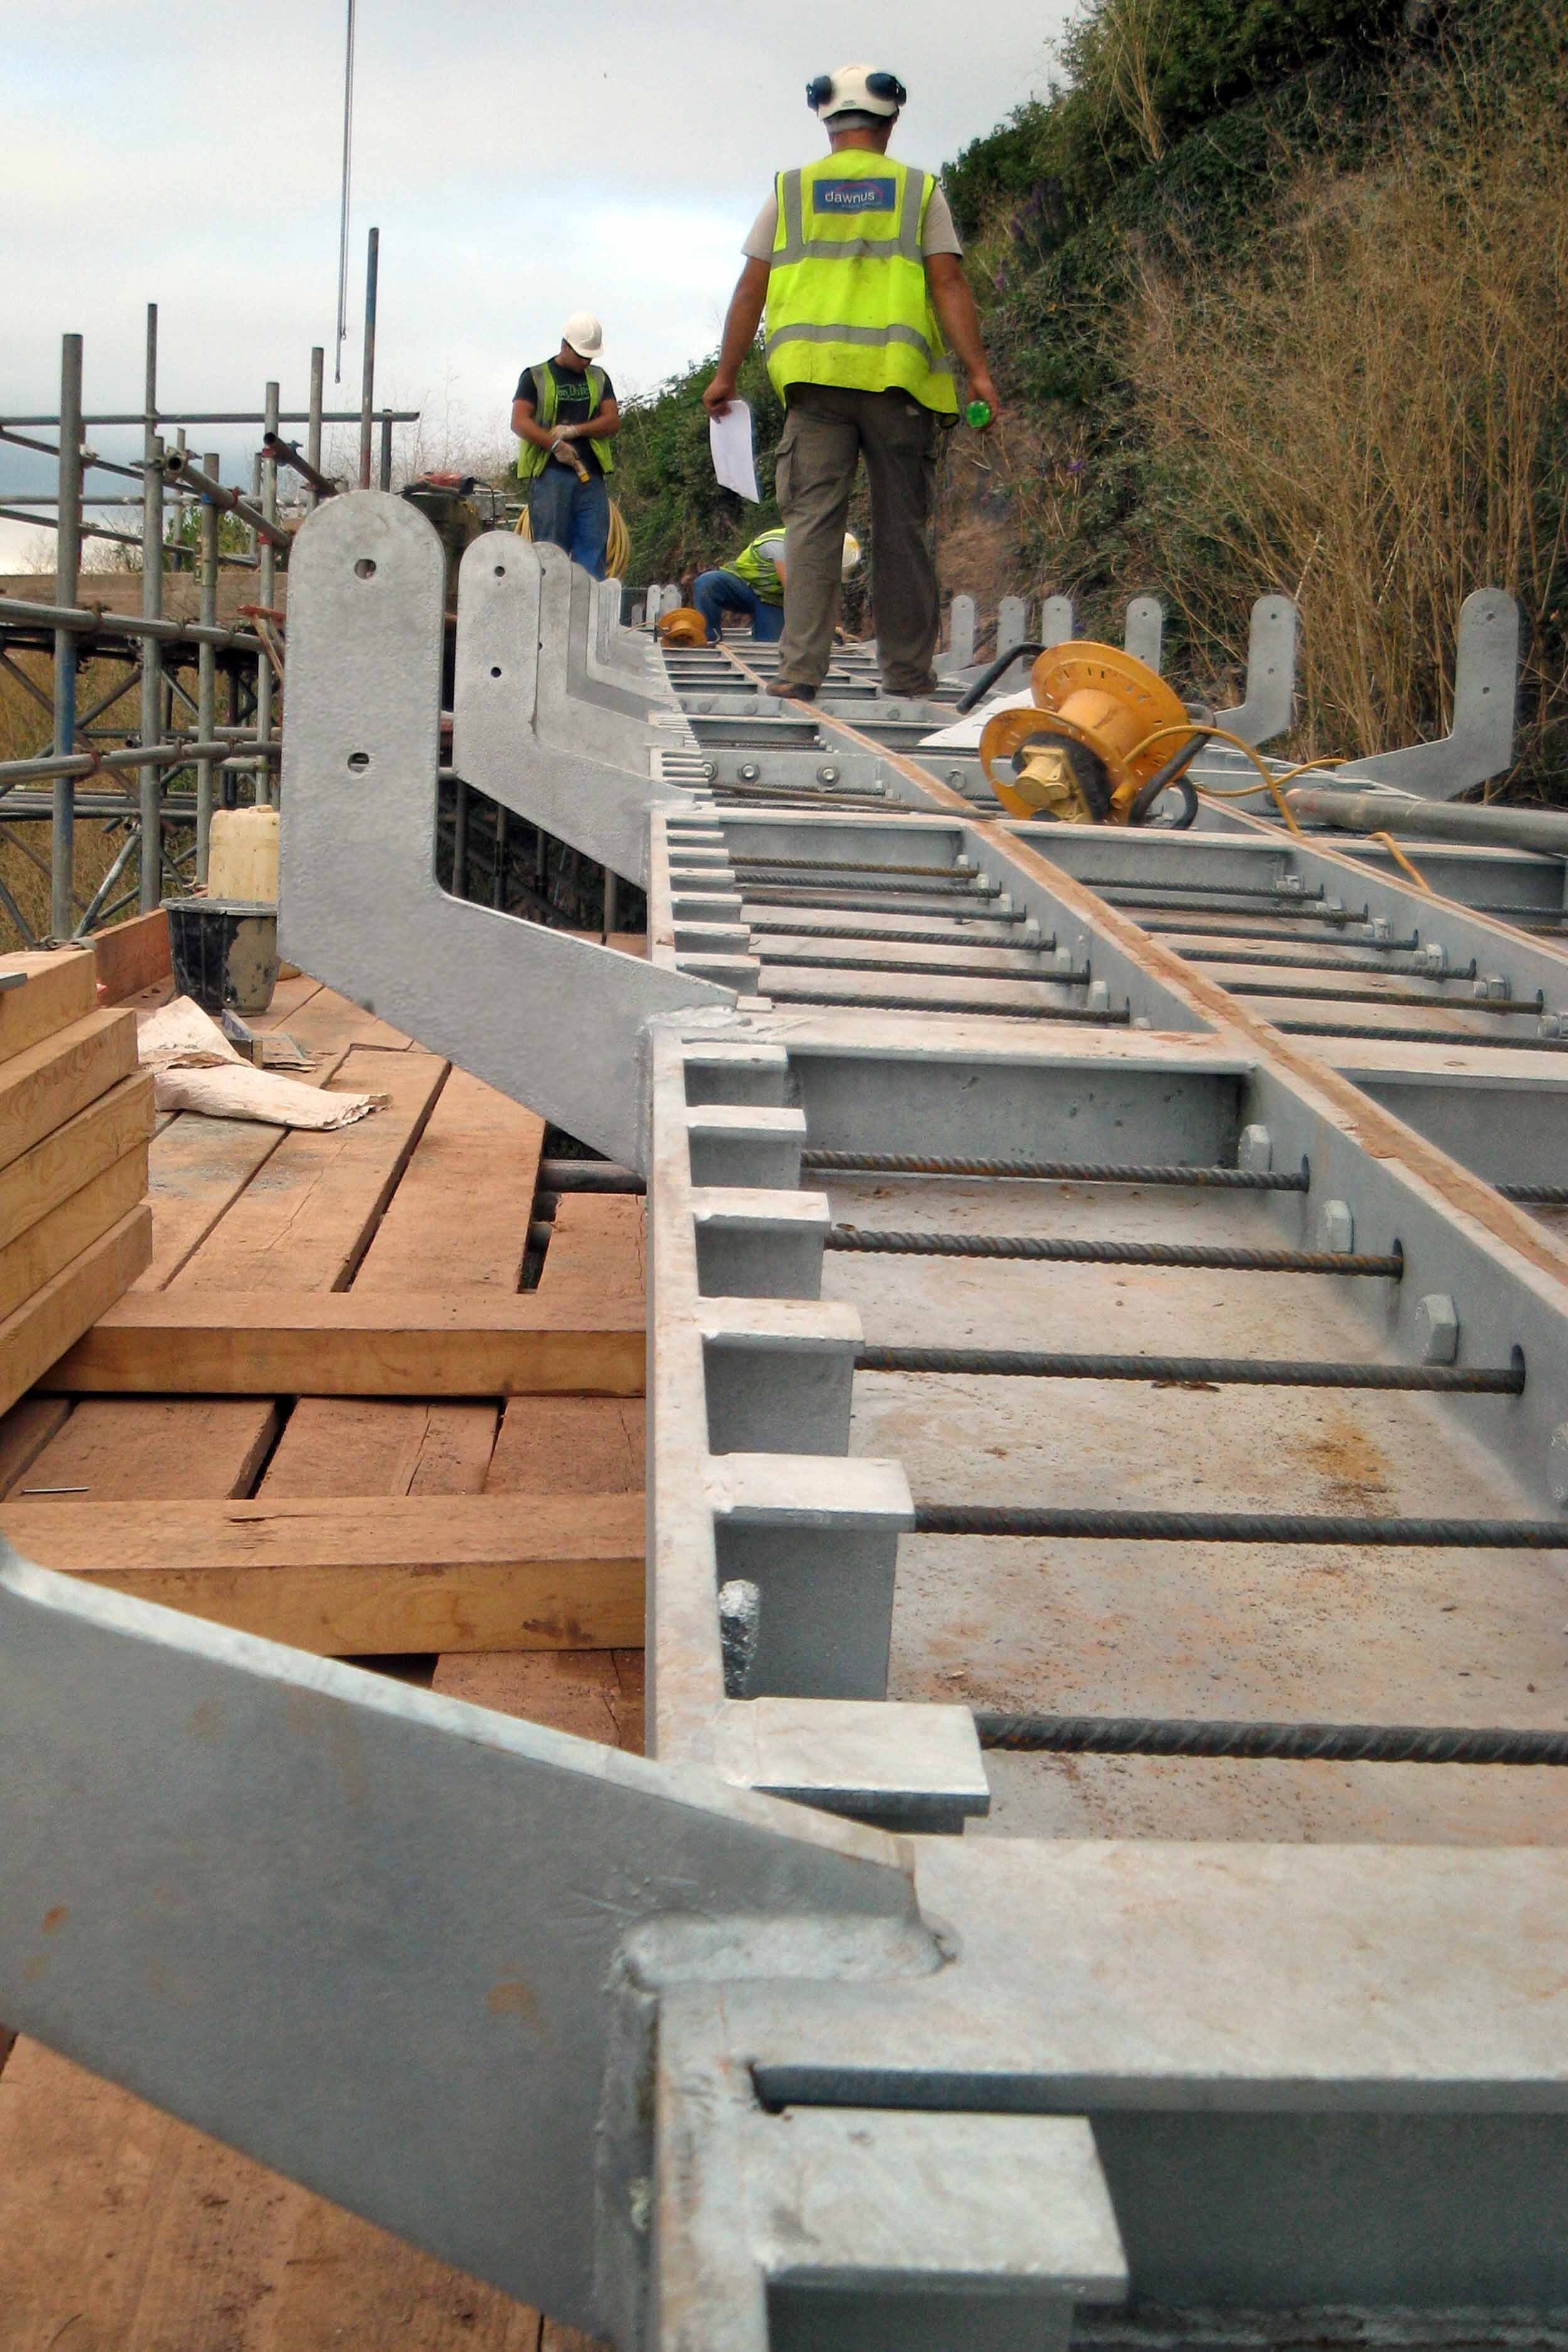 Image RTG 03 - bridge deck steelwork web.jpg